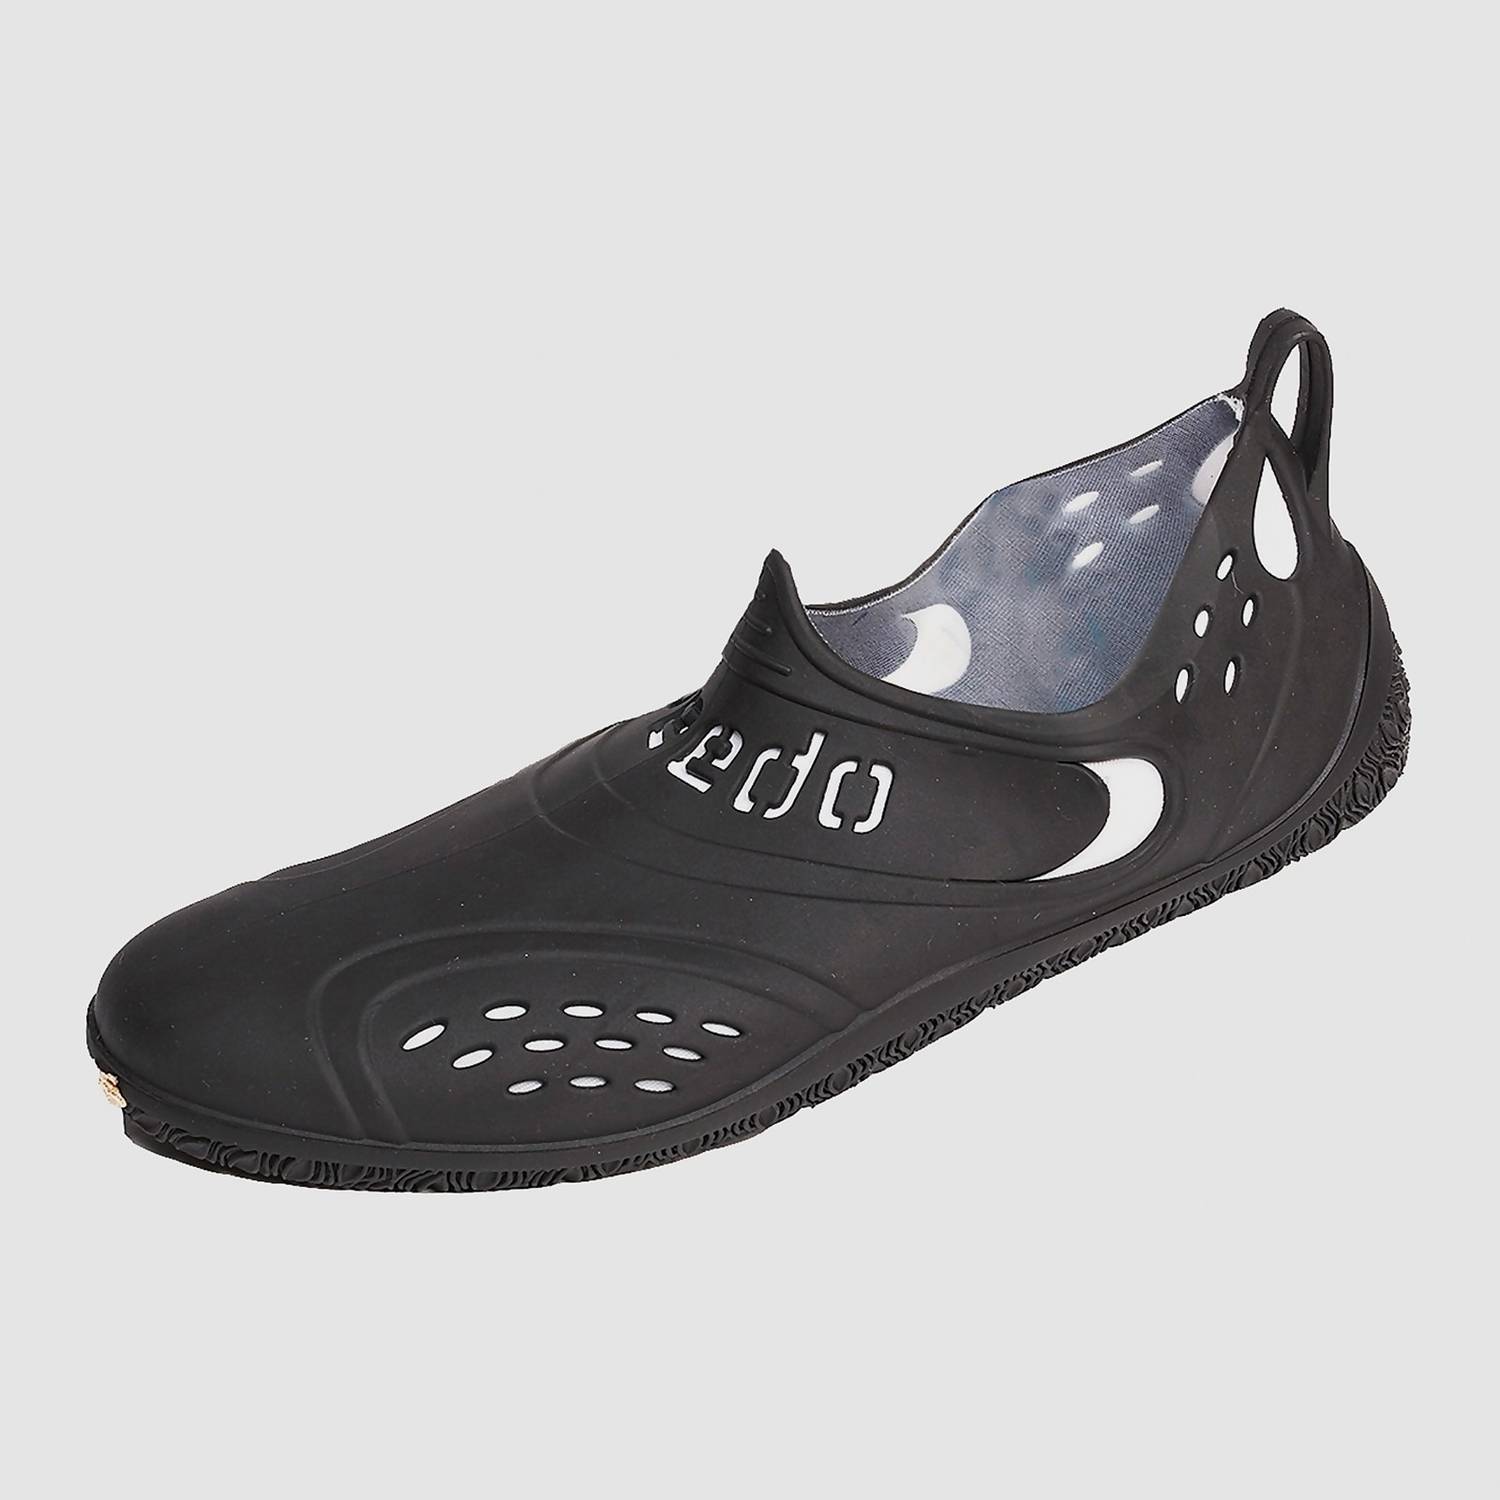 Chaussures D’eau Homme Zanpa Noir Hommes Chaussures Speedo – 2